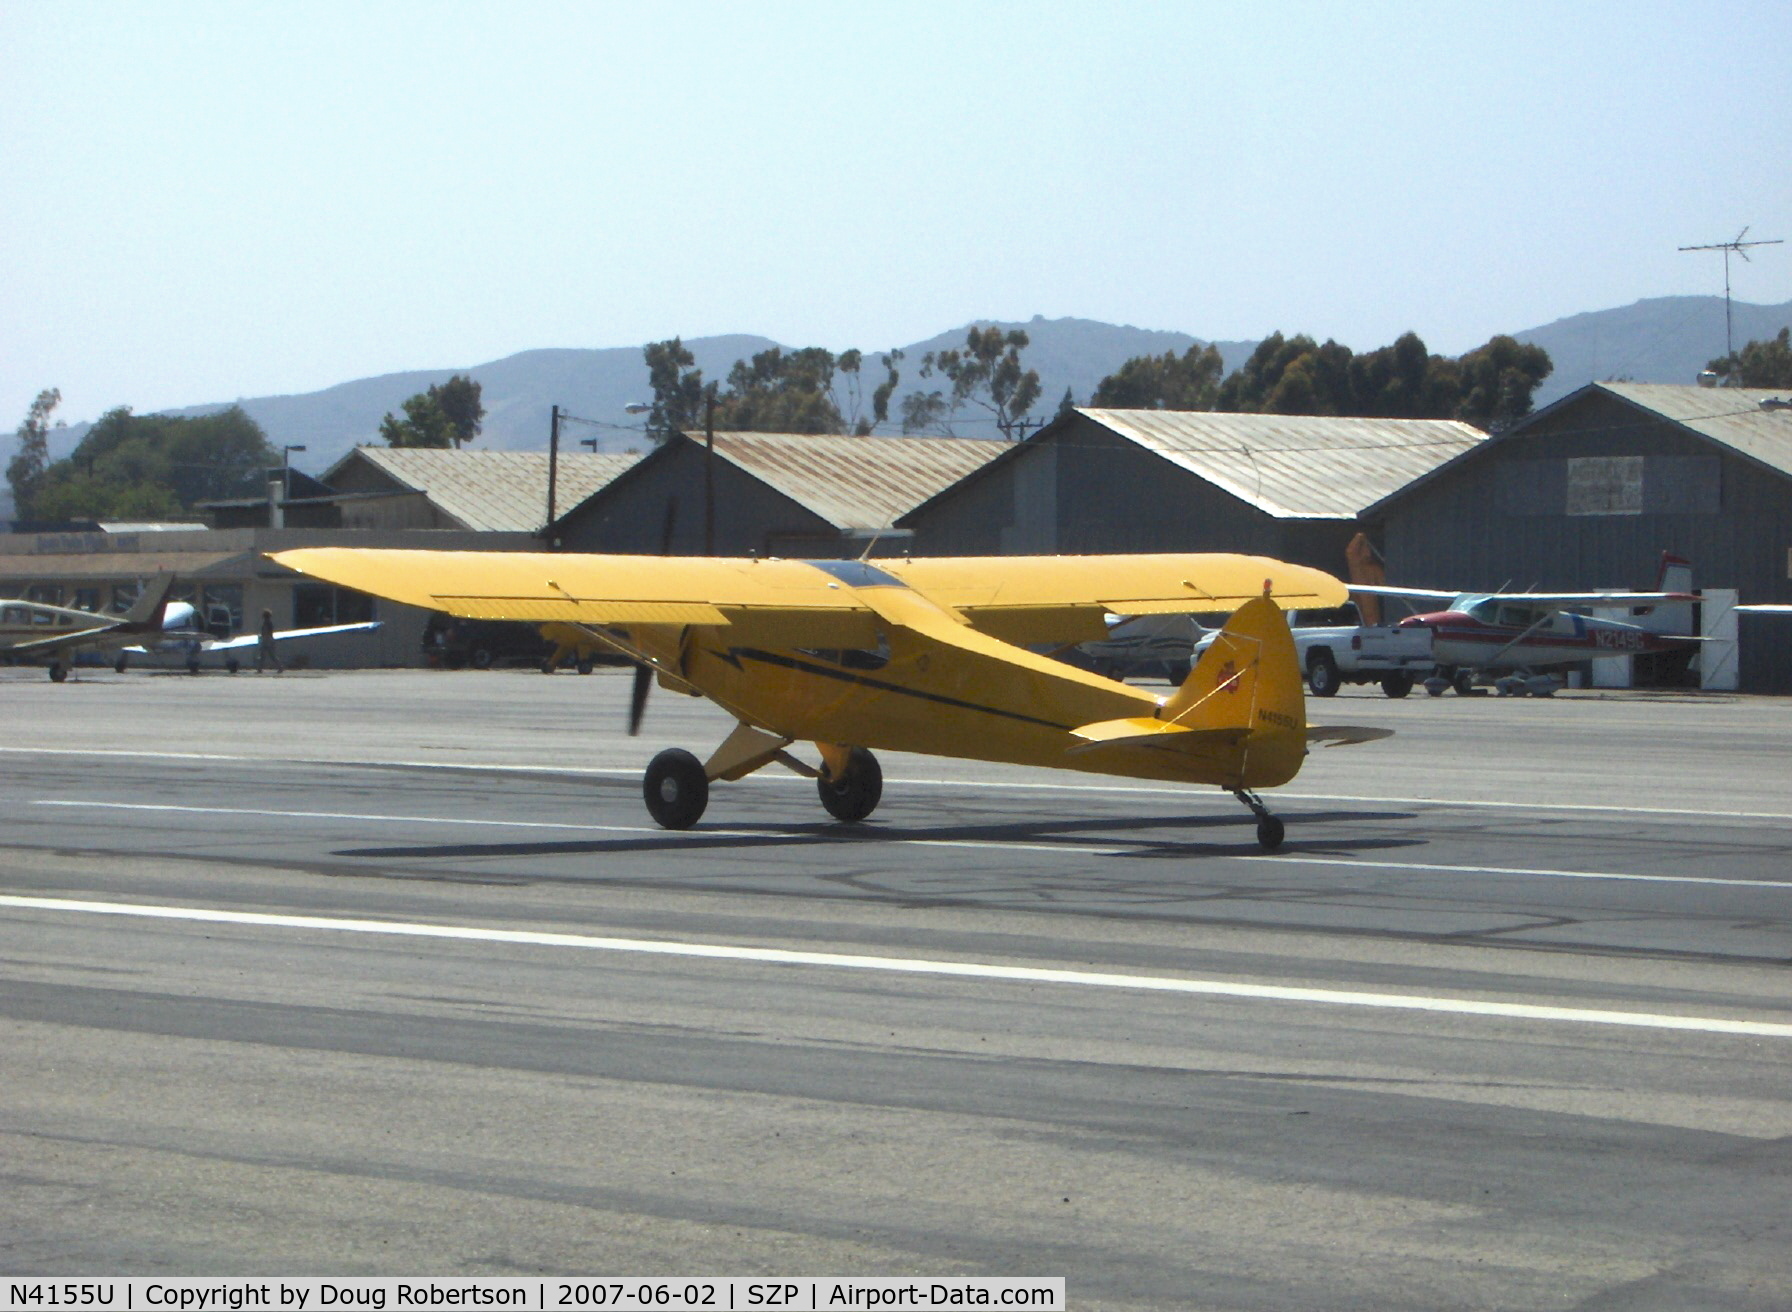 N4155U, 1993 Piper PA-18-150 Super Cub C/N 1809068, 1993 Piper PA-18-150 SUPER CUB, Lycoming O-320 150 Hp, oversize tires,  touchdown Rwy 22